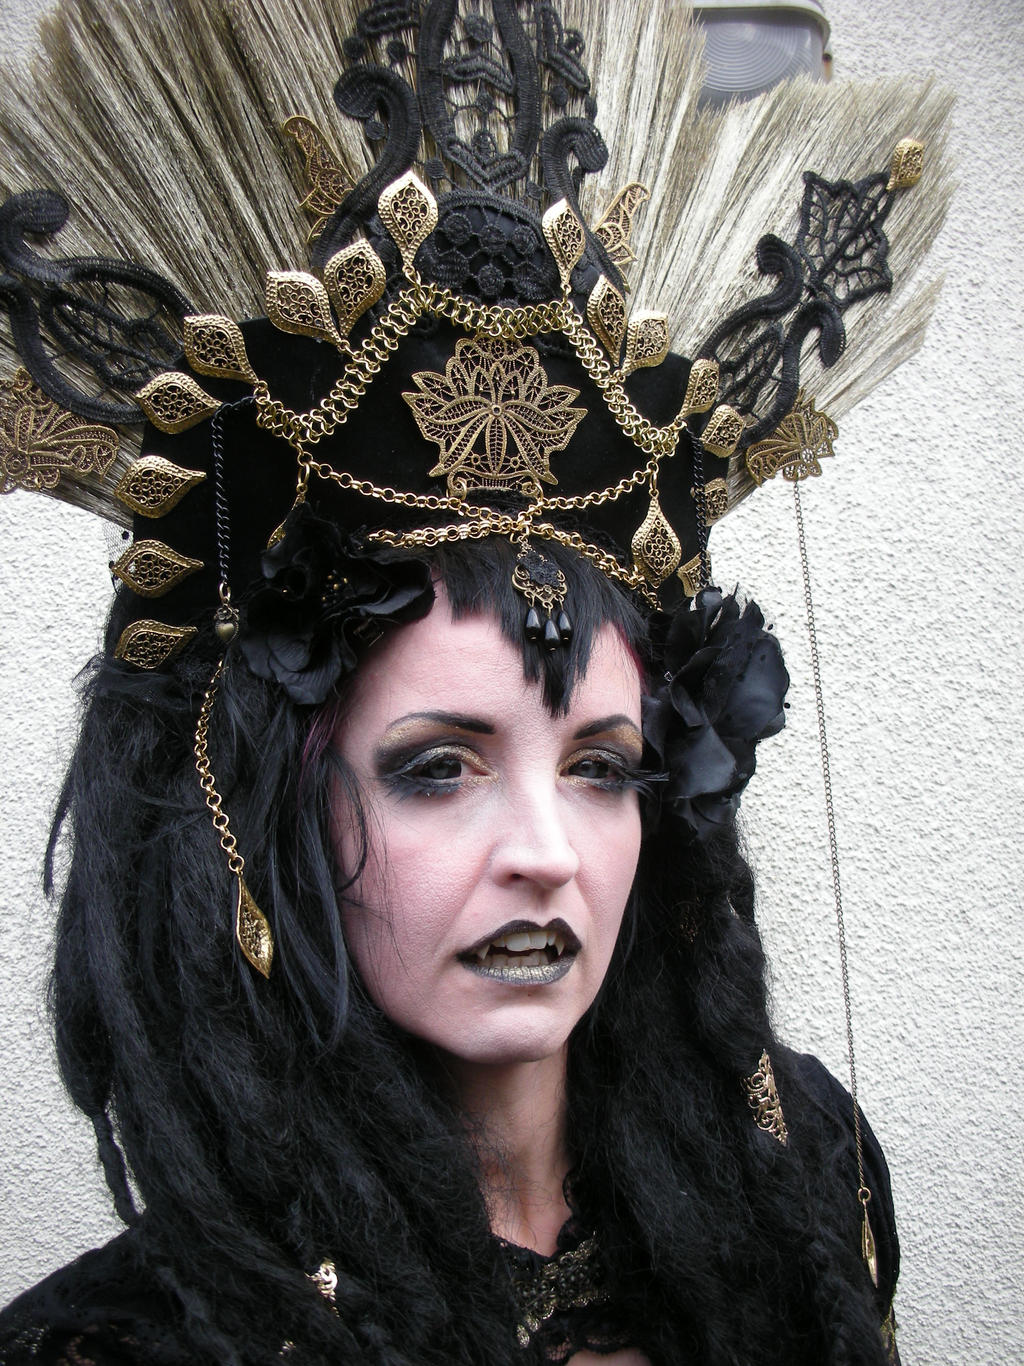 Stock - Vampire queen golden headdress sideview by S-T-A-R-gazer on ...